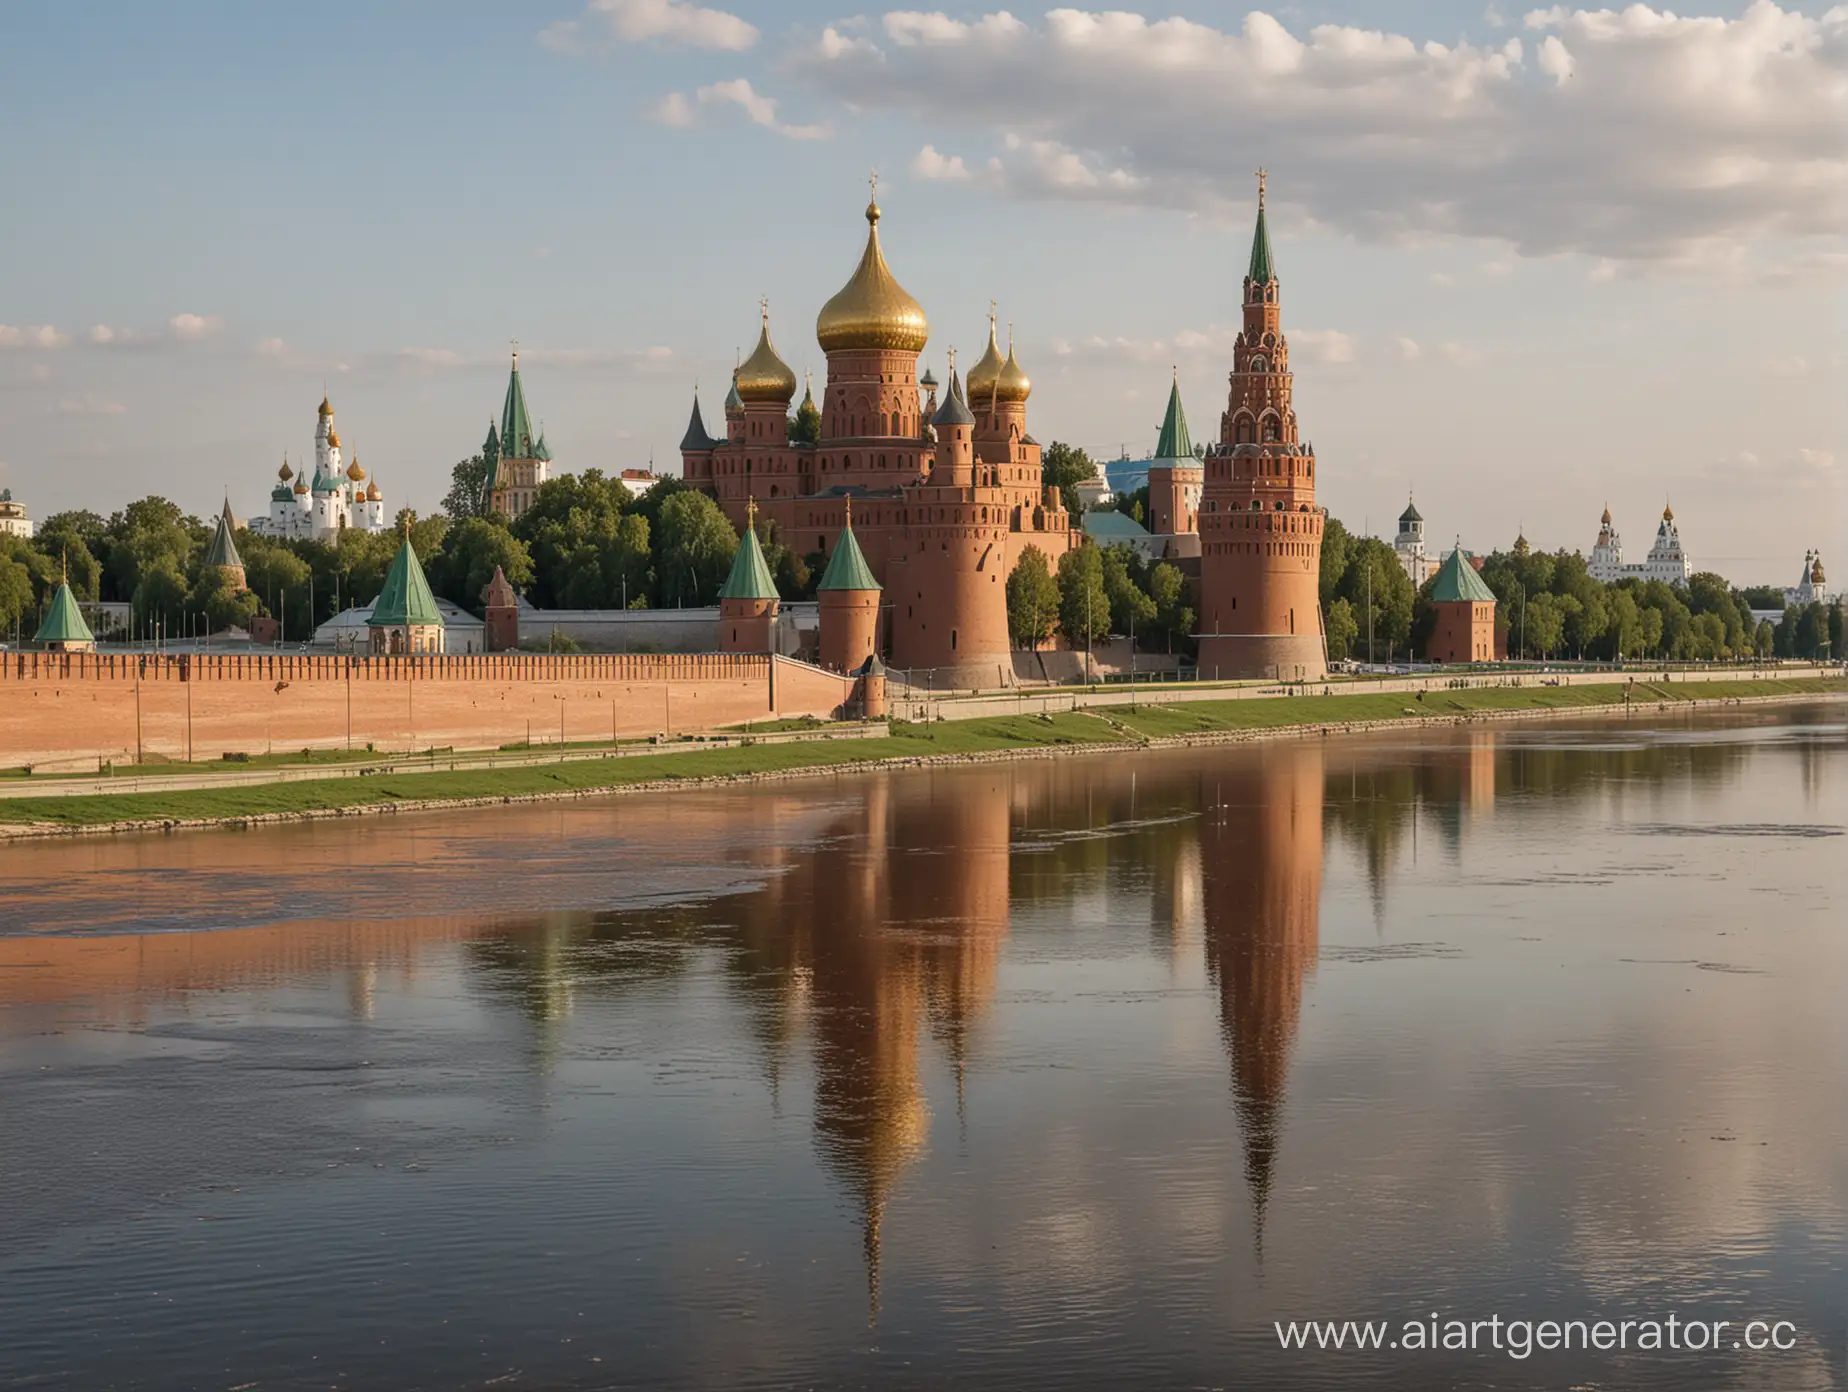 Yaroslavl-Kremlin-Under-Construction-by-the-Volga-River-in-1500